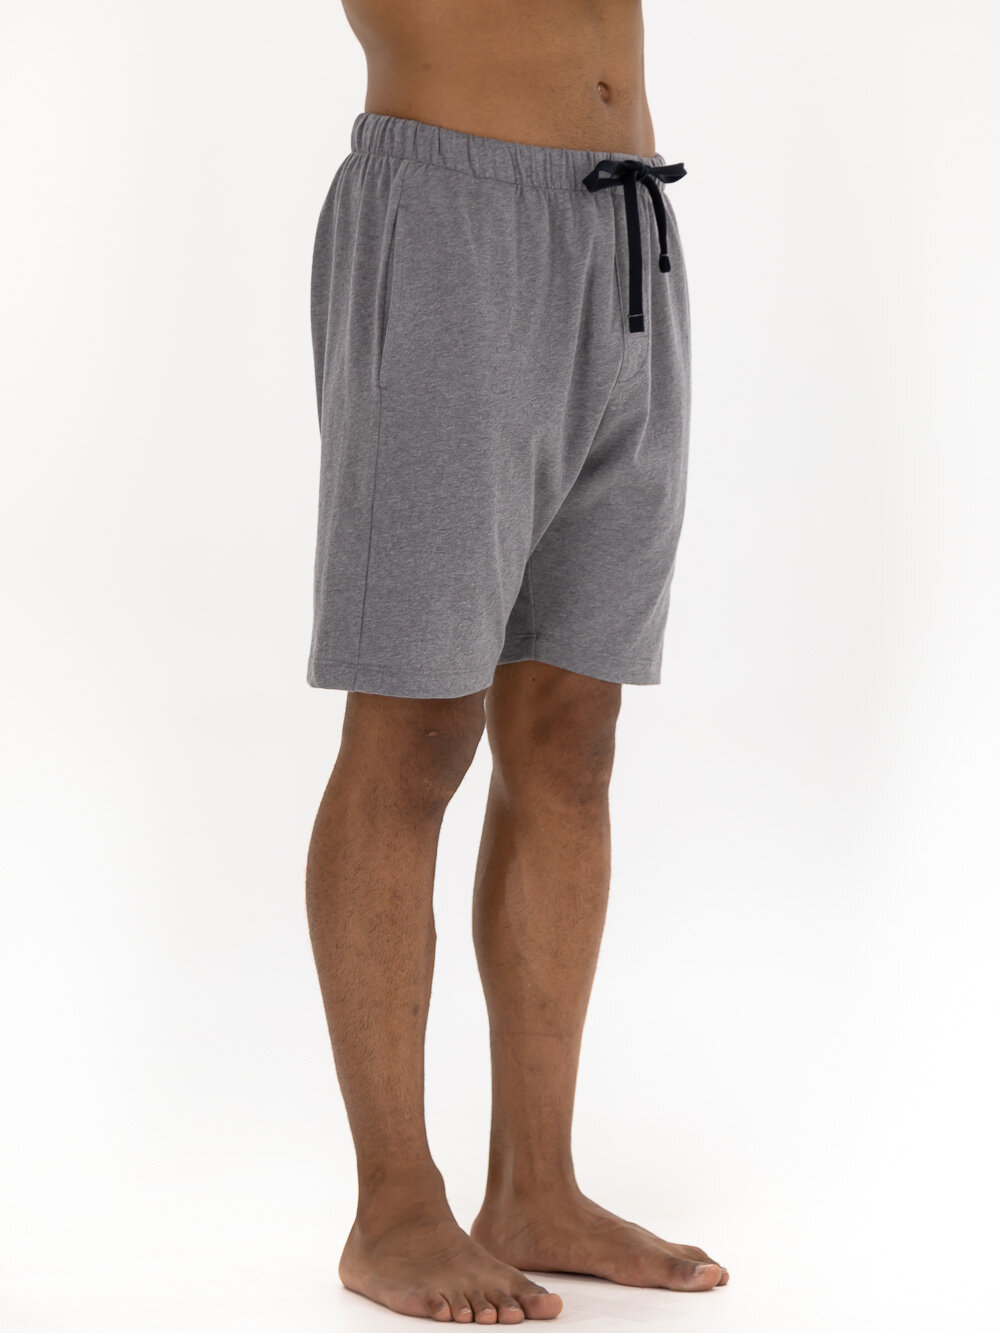 Men's Organic Cotton Lounge Shorts in Navy Check